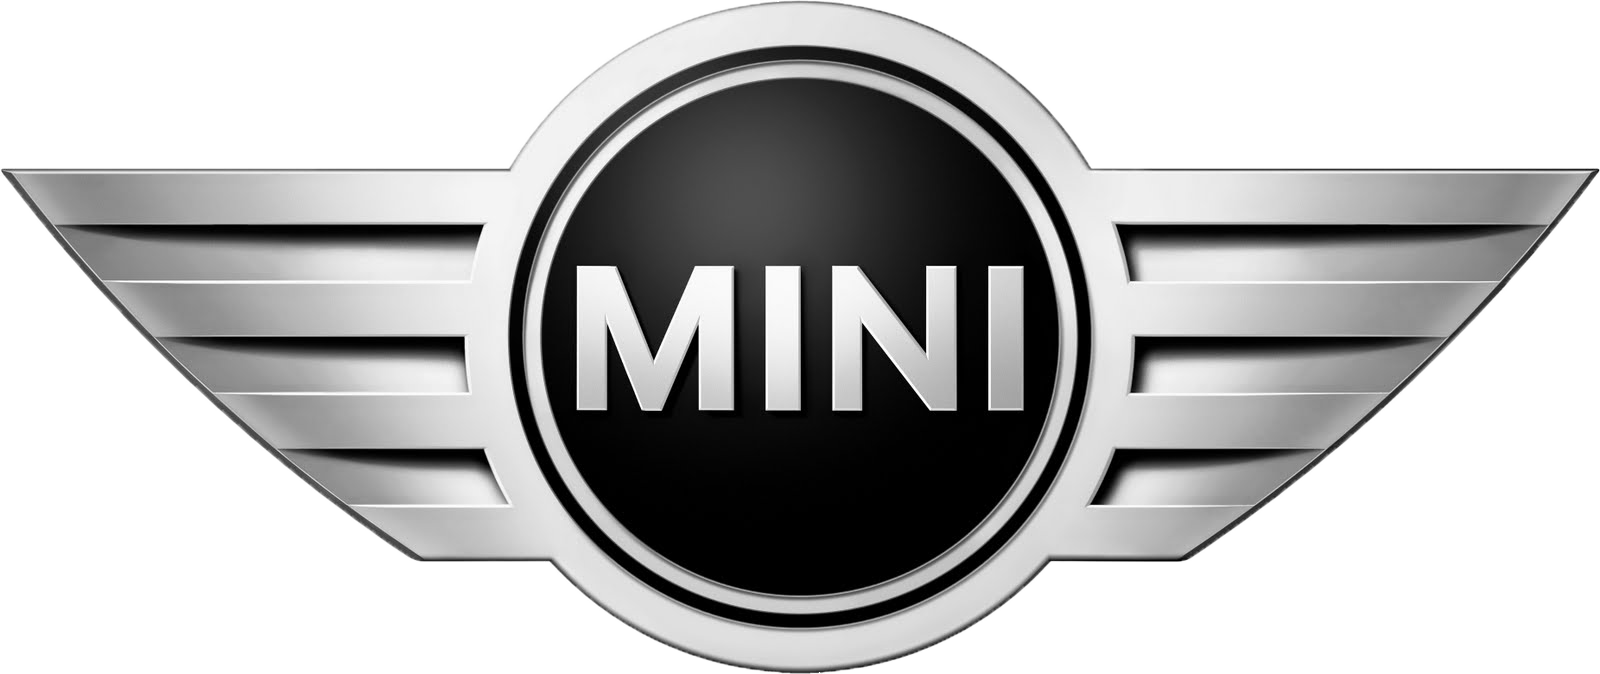 Mini  Car Logo PNG Image